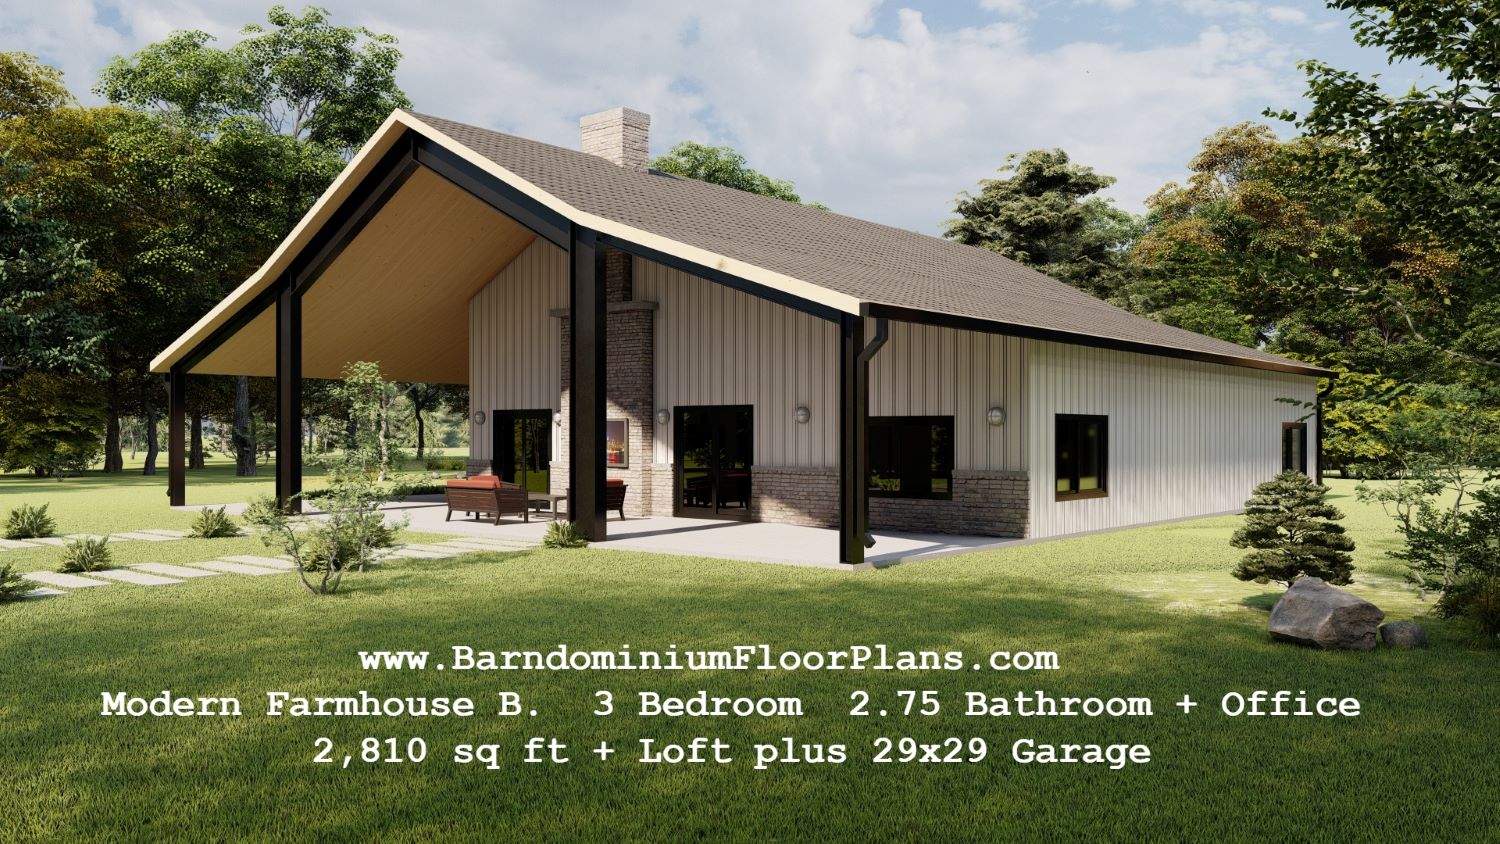 modern-farmhouse-version-b-3d-rendering-3-bed-3-bath-2810-sq-ft-floor-plan-with-office-barndominiumfloorplans